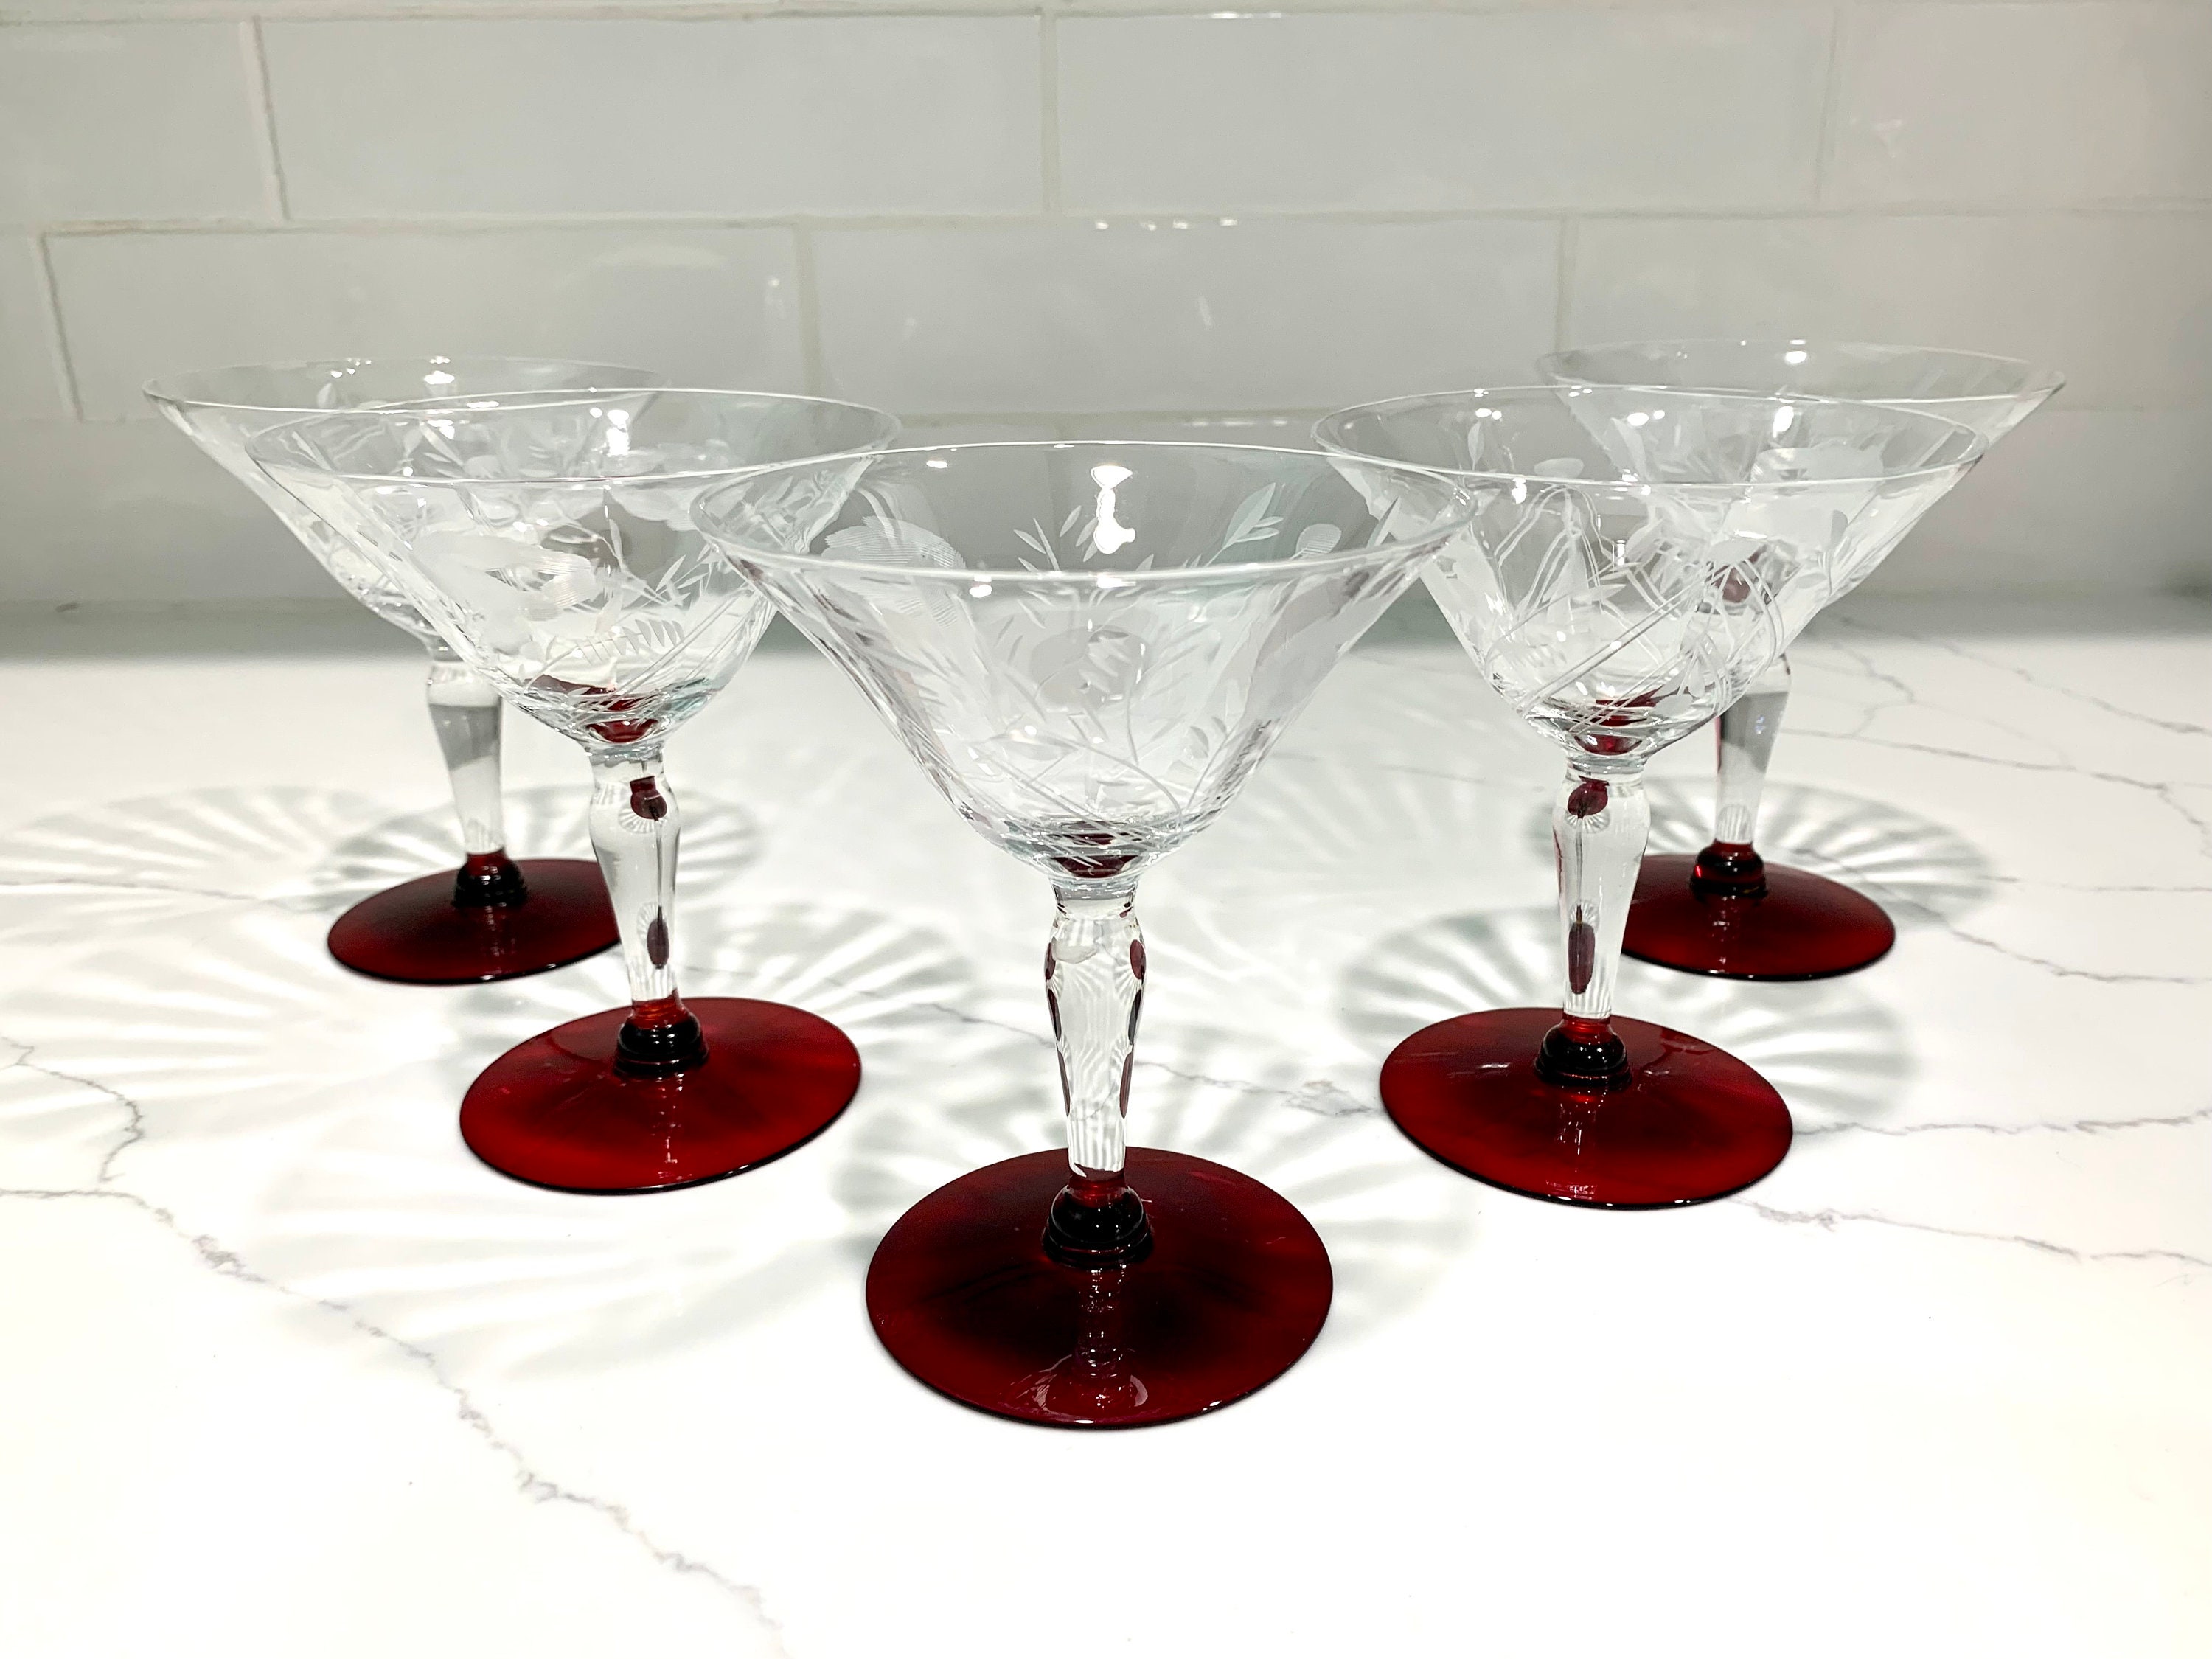 Christmas Crystal Martini Glasses, Cute Penguins Textured Glass, Holiday  Glassware, Margarita,barware, Wedding, Animal Cocktail Glass, 